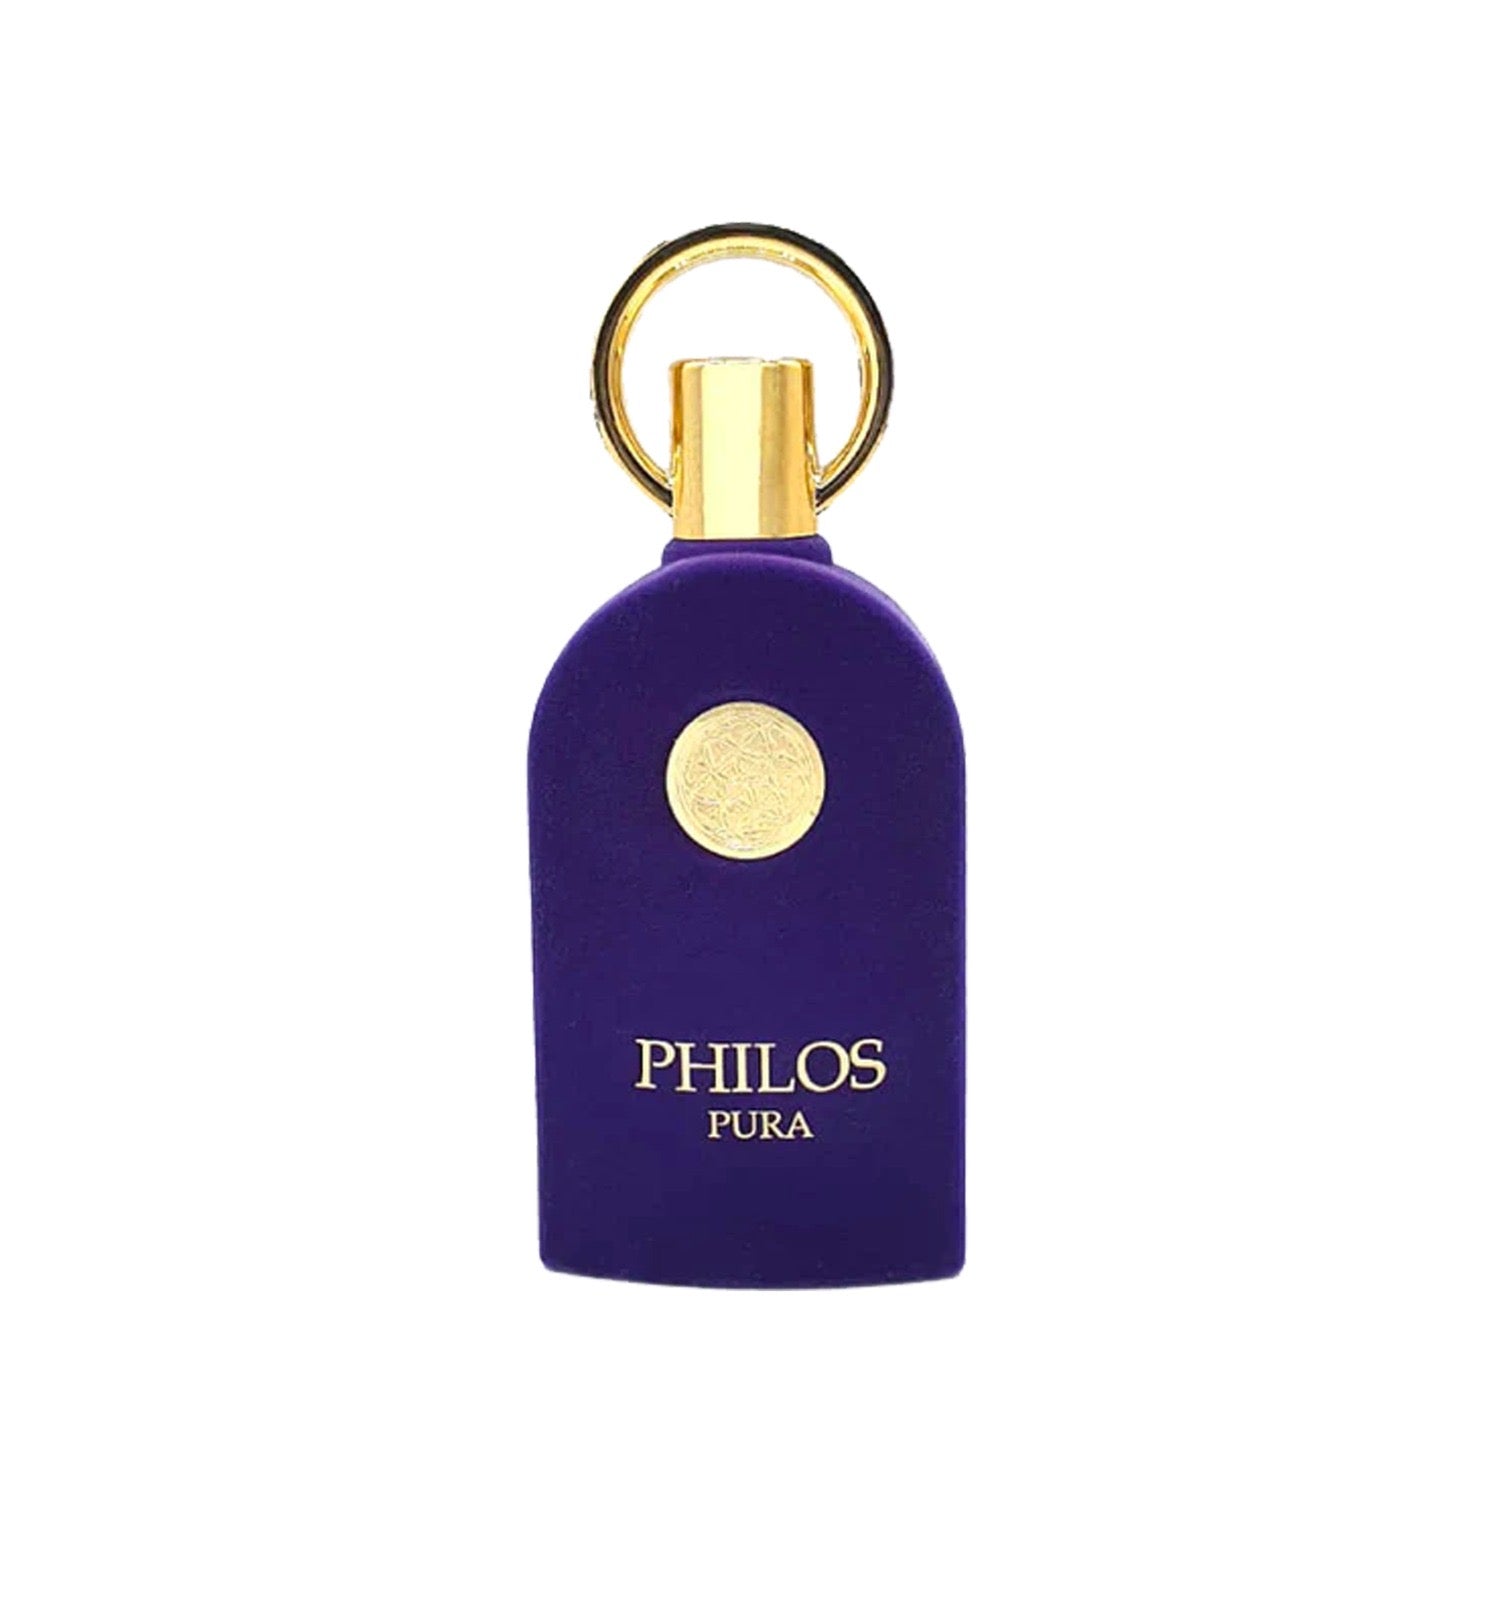 Philos - Pura